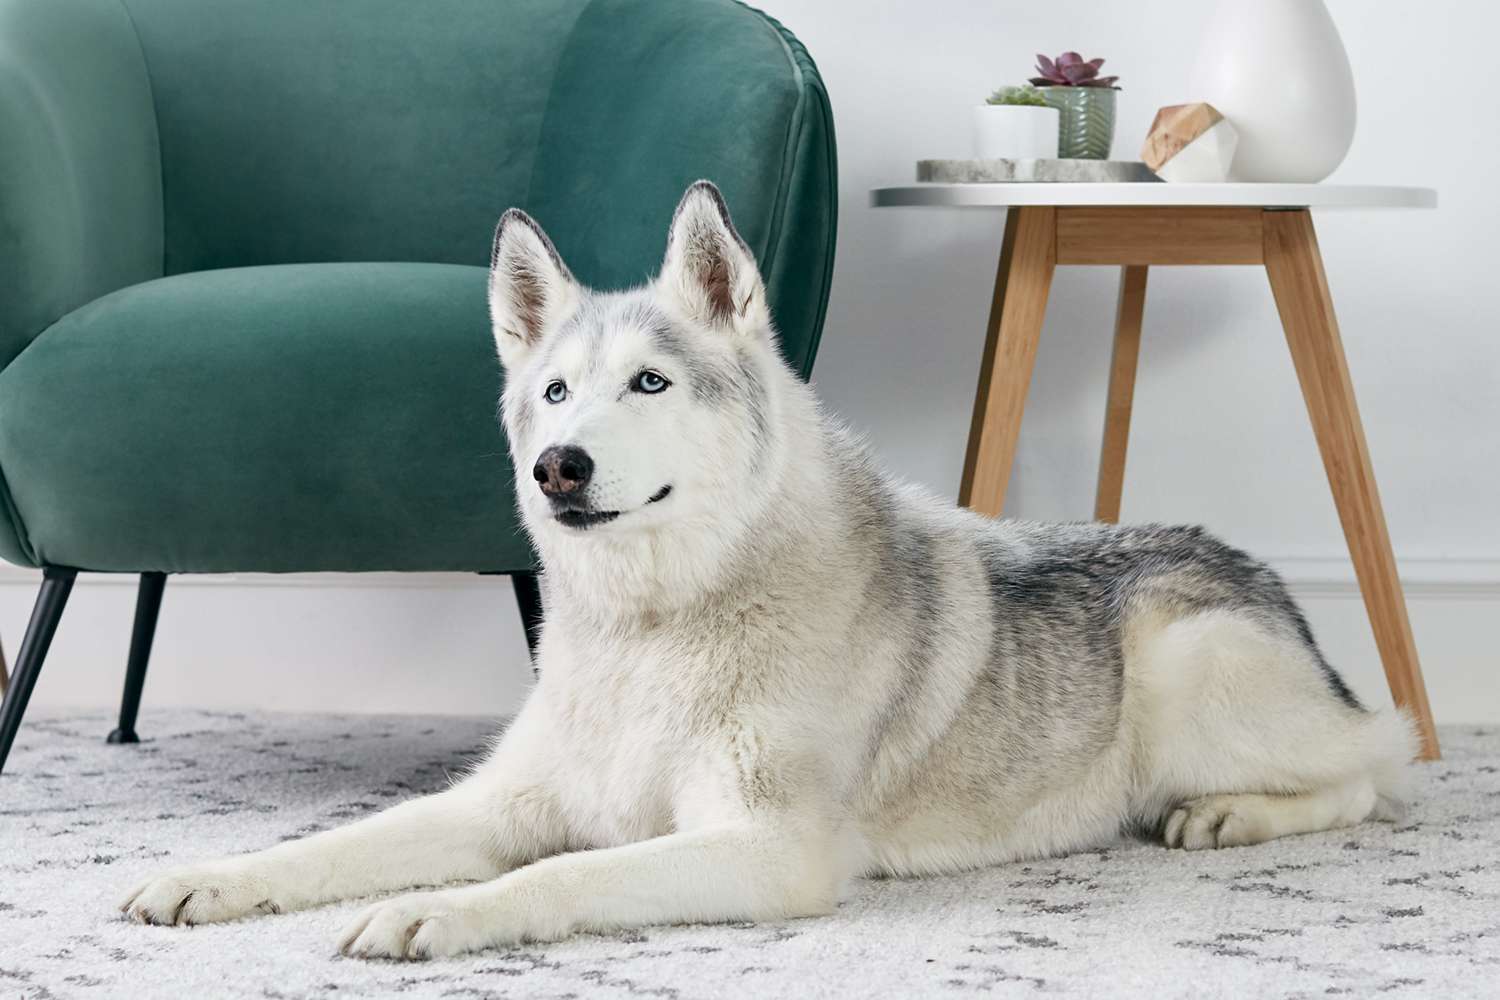 A Siberian Husky lounging on a rug